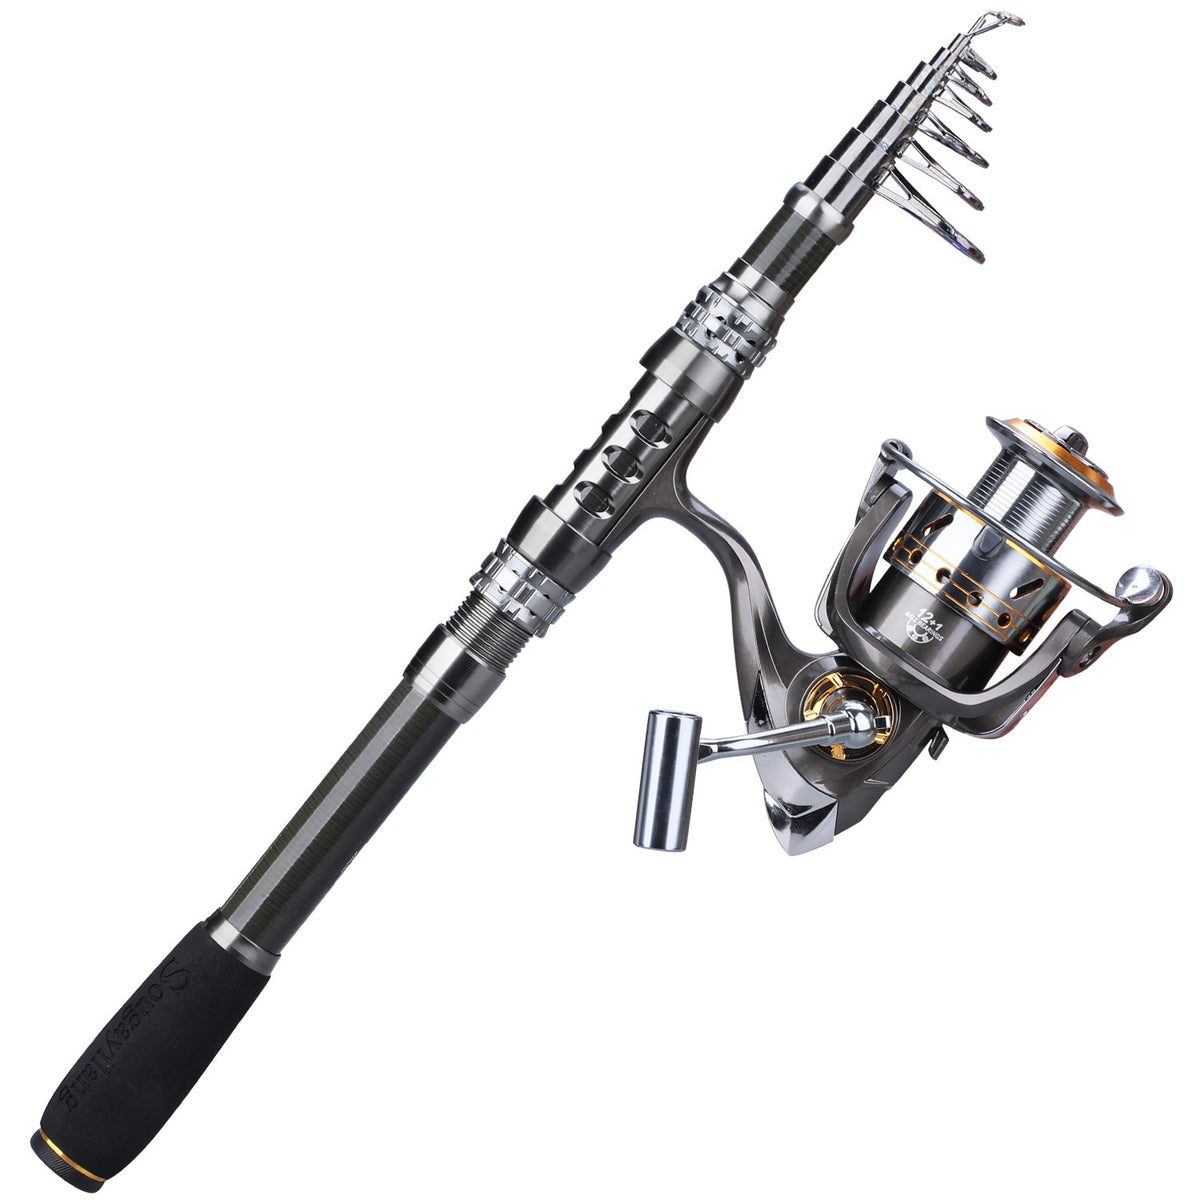 Sougayilang Fishing Rod and Reel Combo, Telescopic Casting Rod